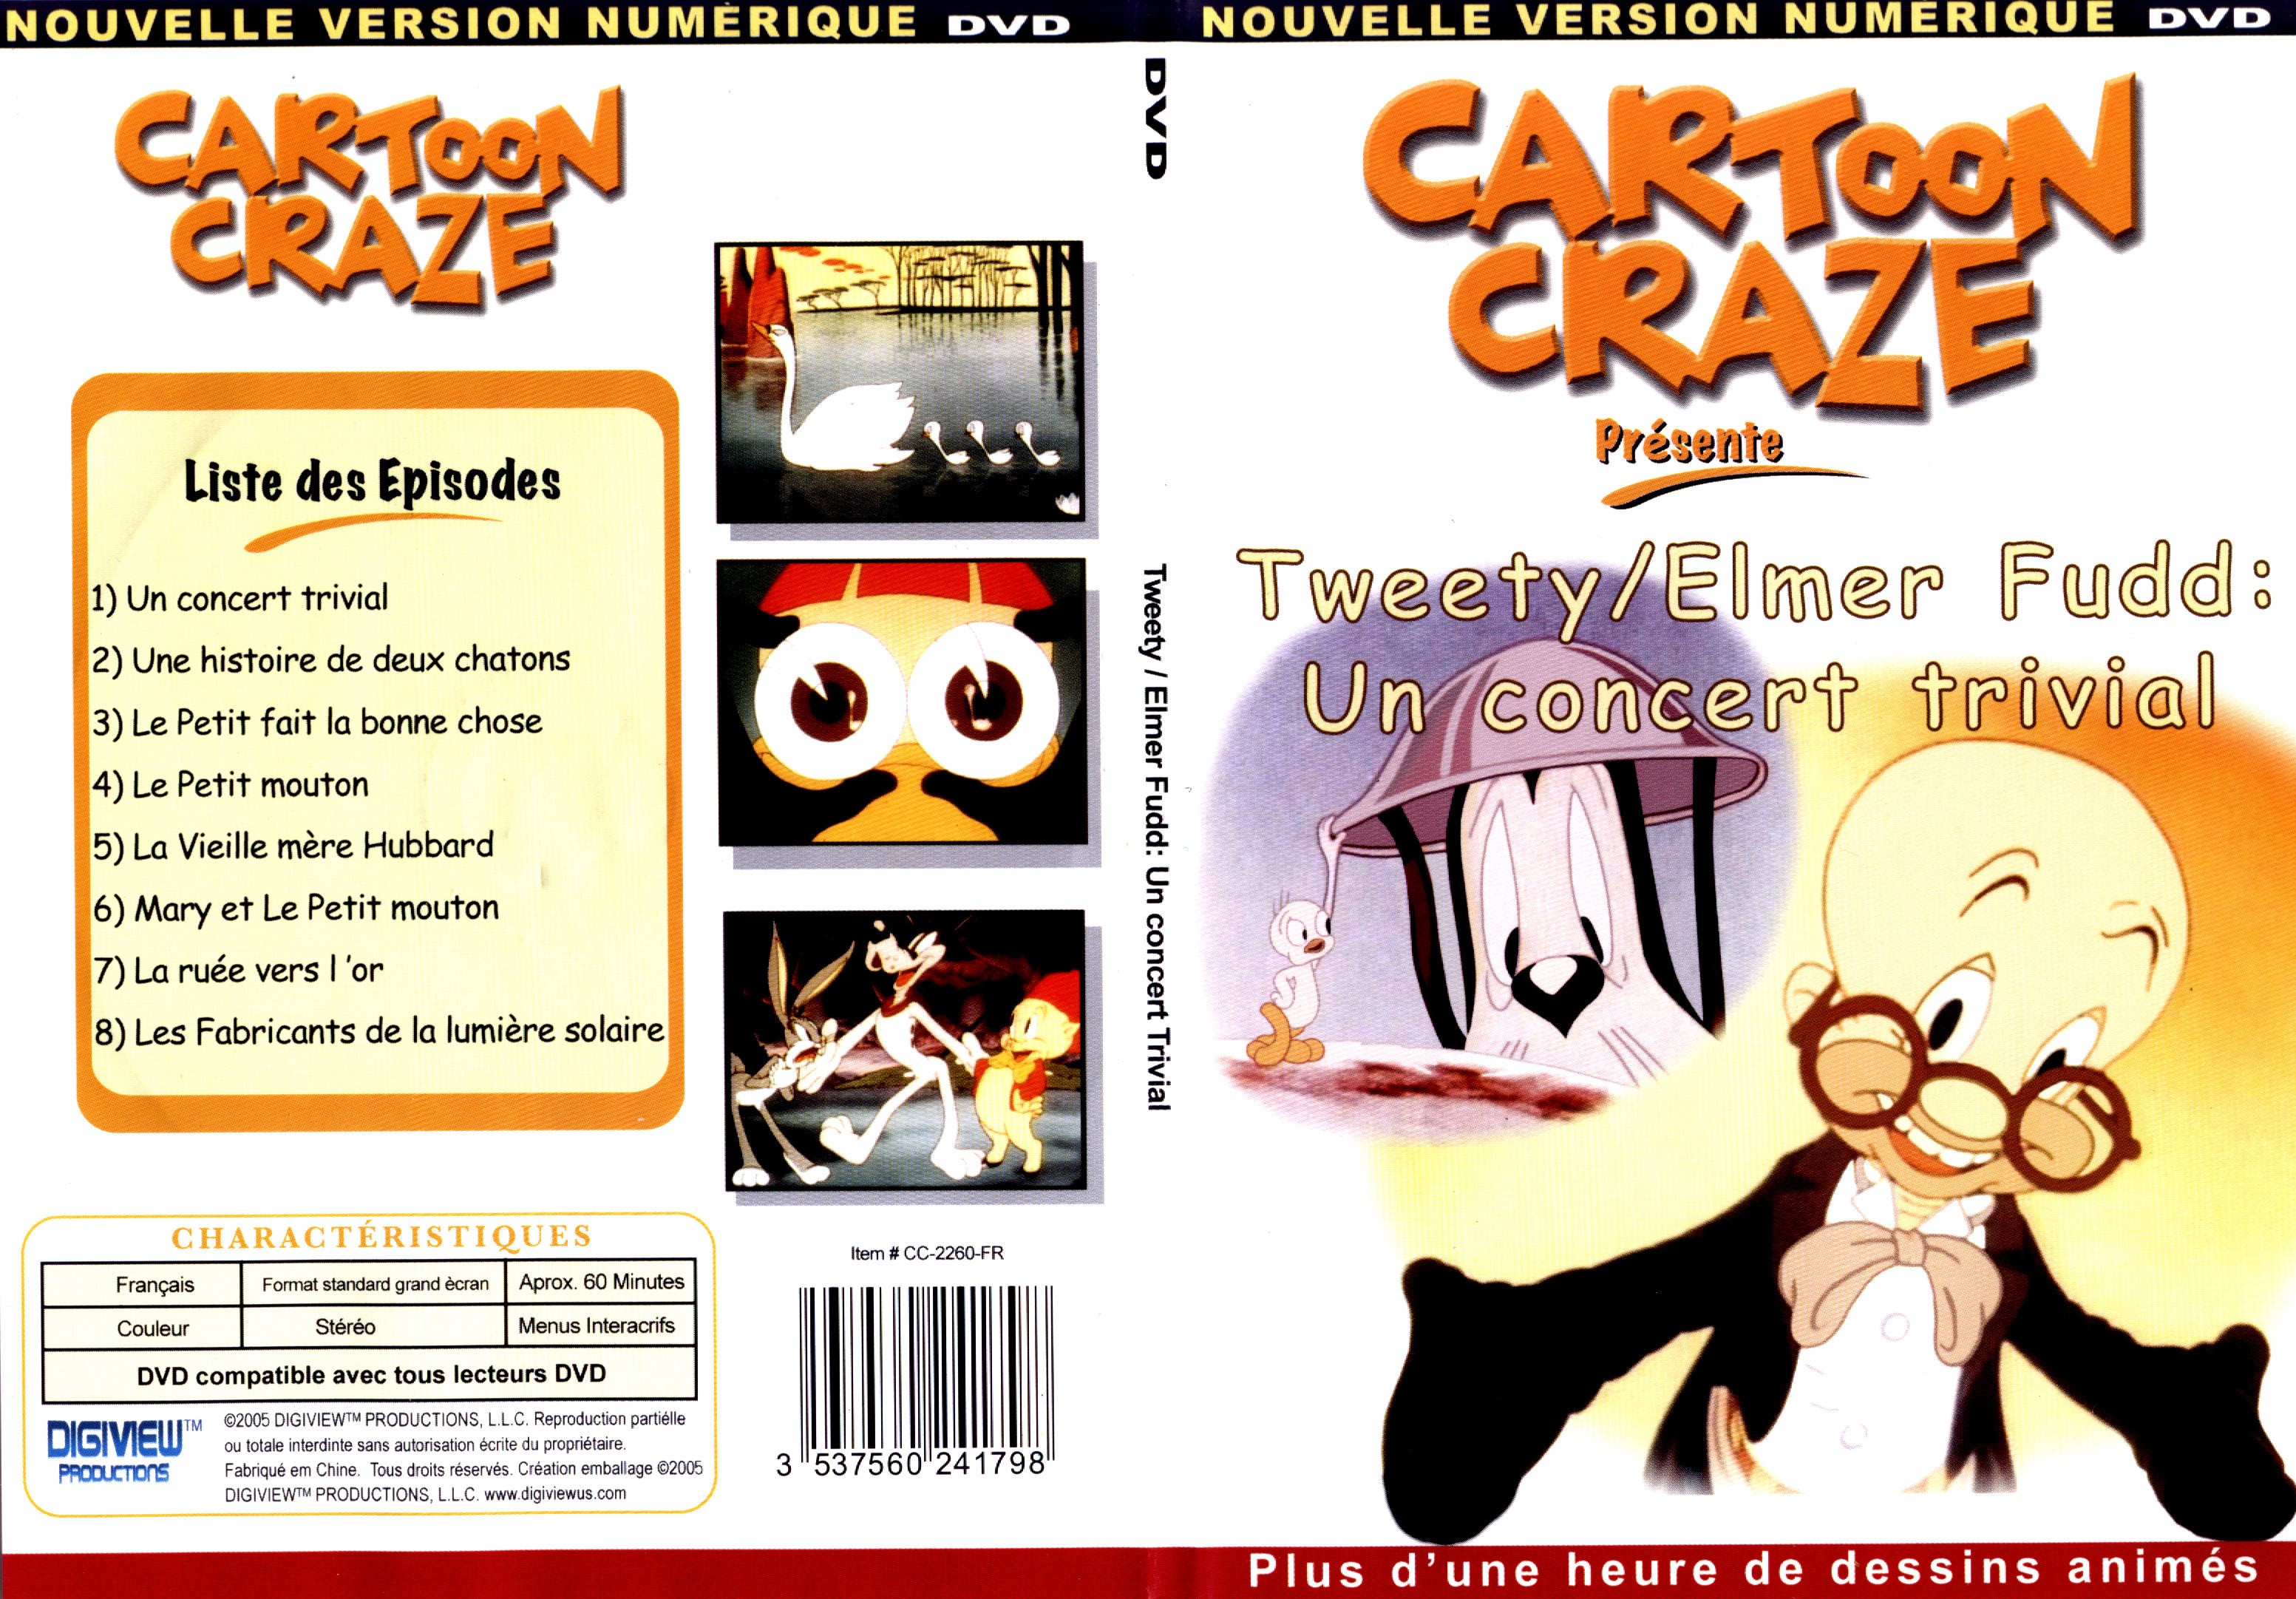 Jaquette DVD Cartoon craze - Tweety Elmer Fudd  Un concert trivial